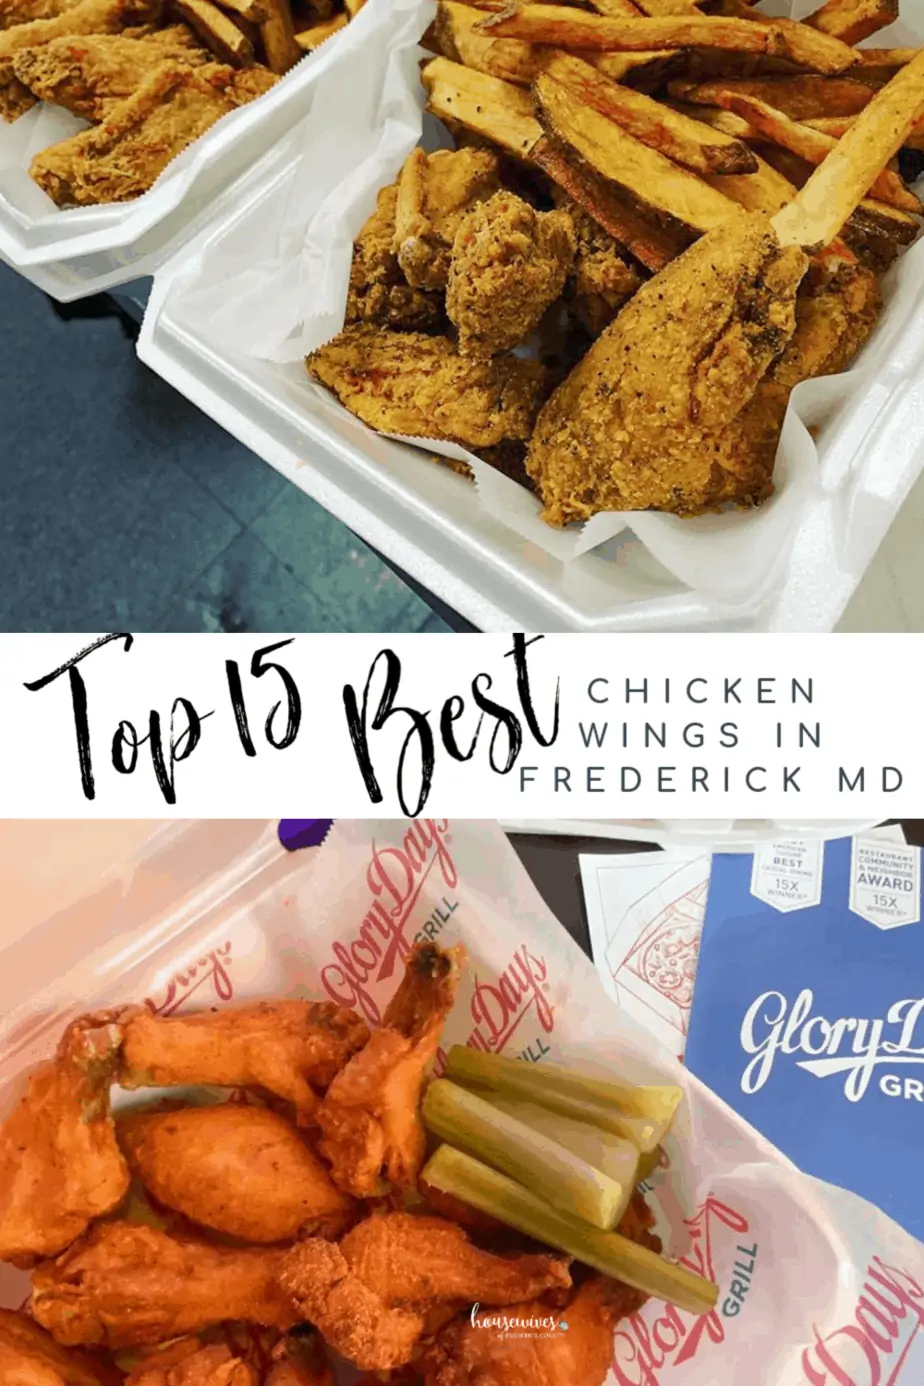 Top 15 Best Chicken Wings in Frederick Md